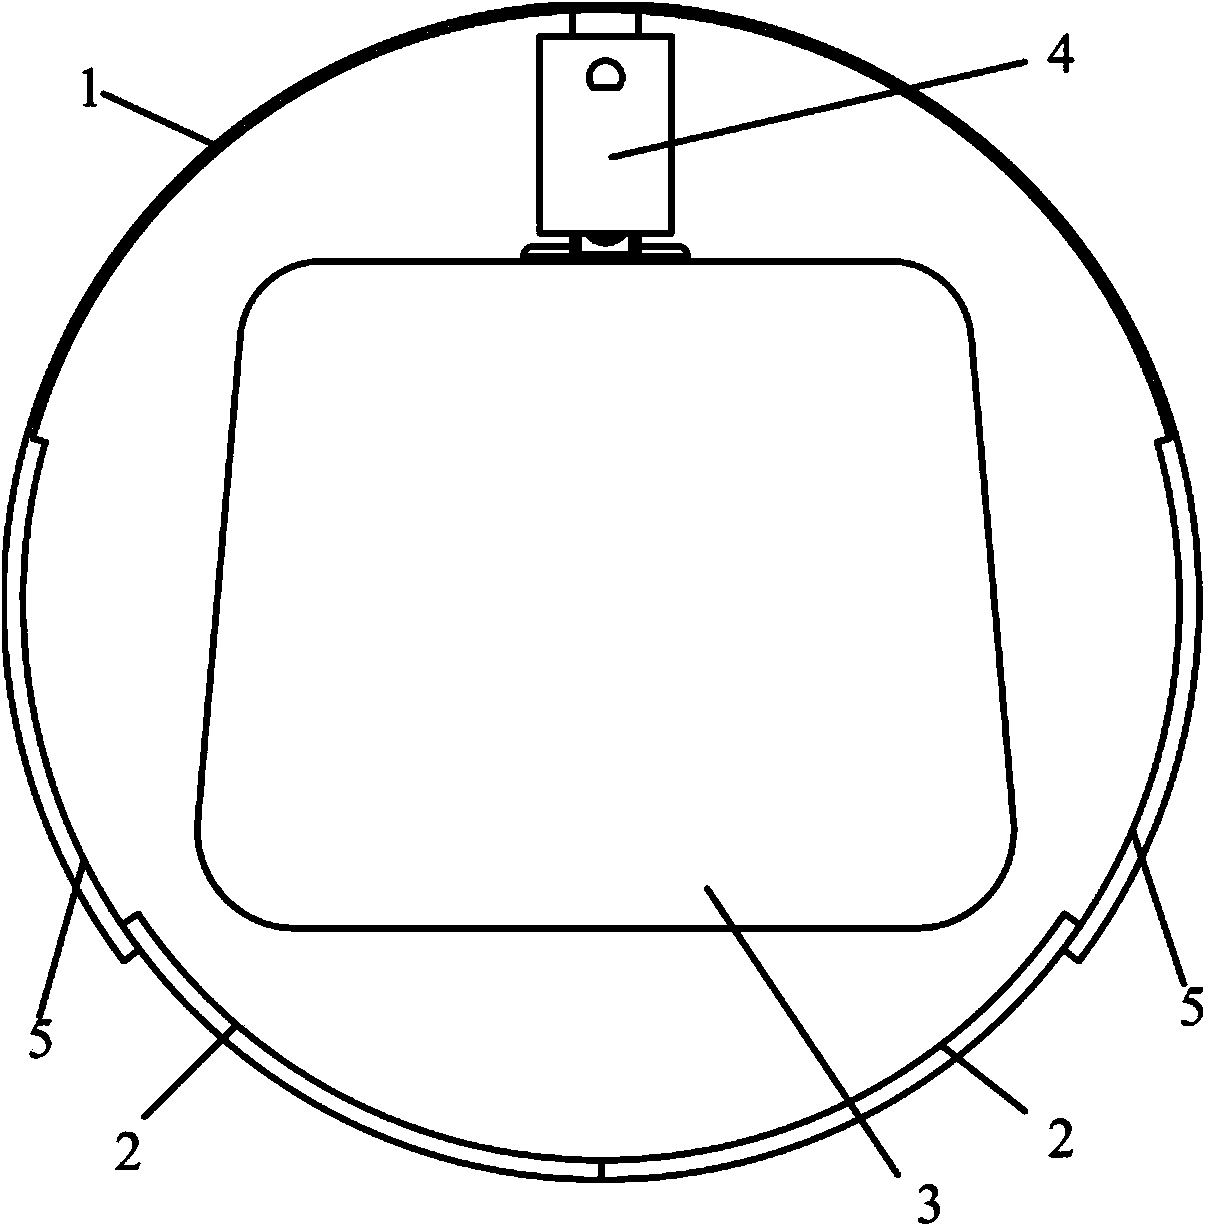 Circular cross-section door opening design method of embedded compartment